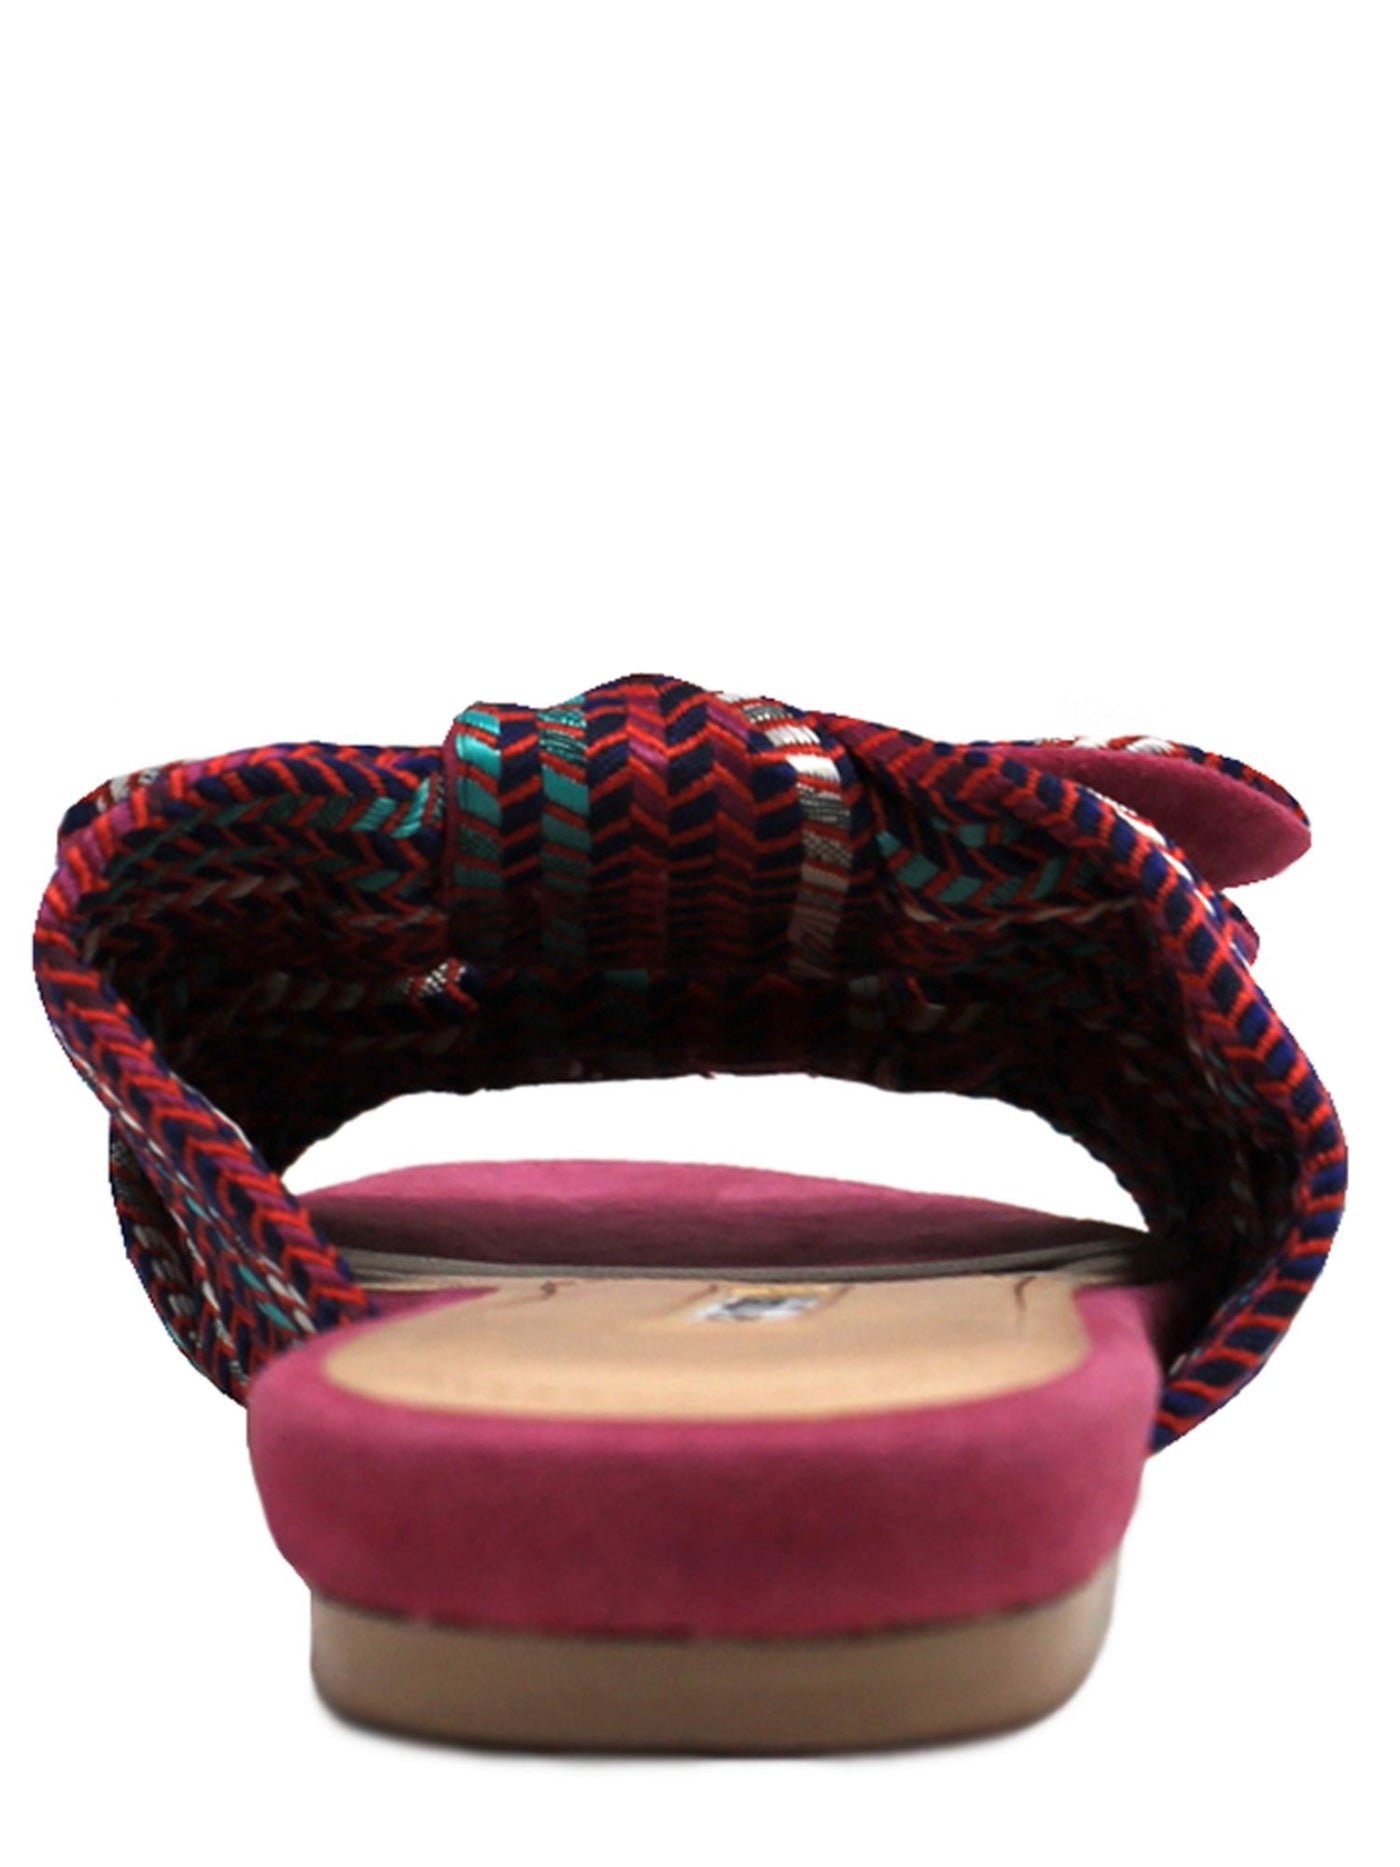 CHARLES DAVID Womens Pink Herringbone Bow Accent Comfort Soufflï¿½ Round Toe Block Heel Slide Sandals Shoes 7 M